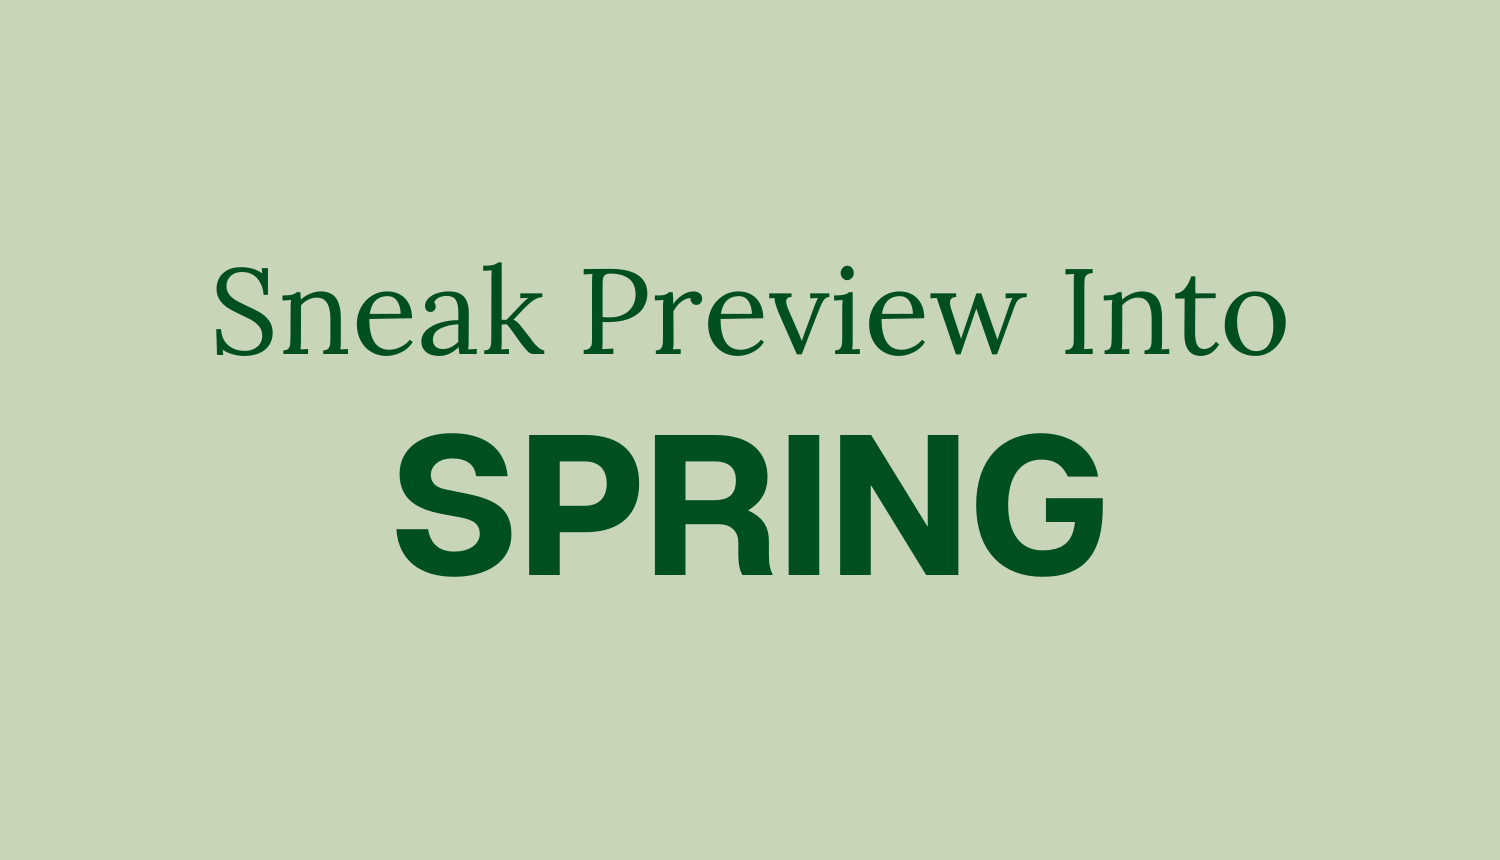 Sneak Preview Into Spring